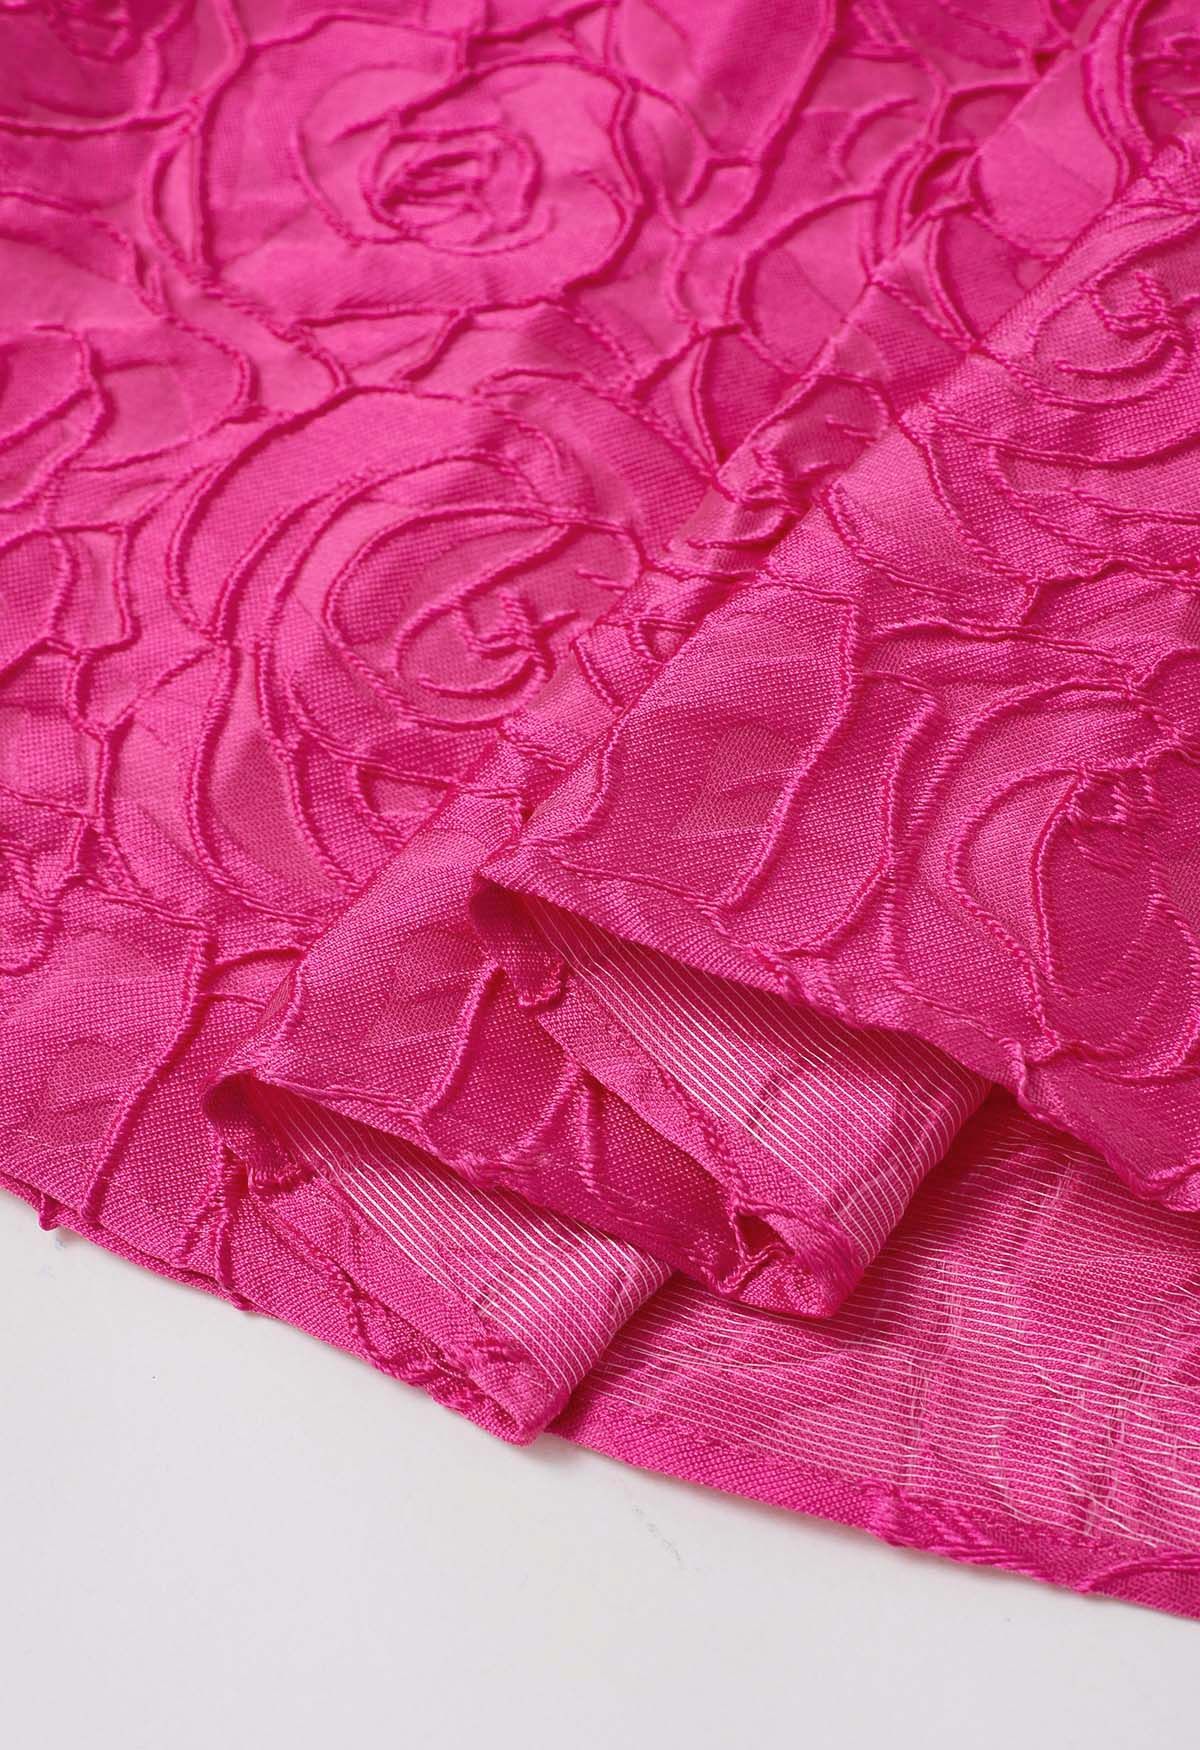 Hot Pink Roses Jacquard Side Pocket Pleated Midi Skirt